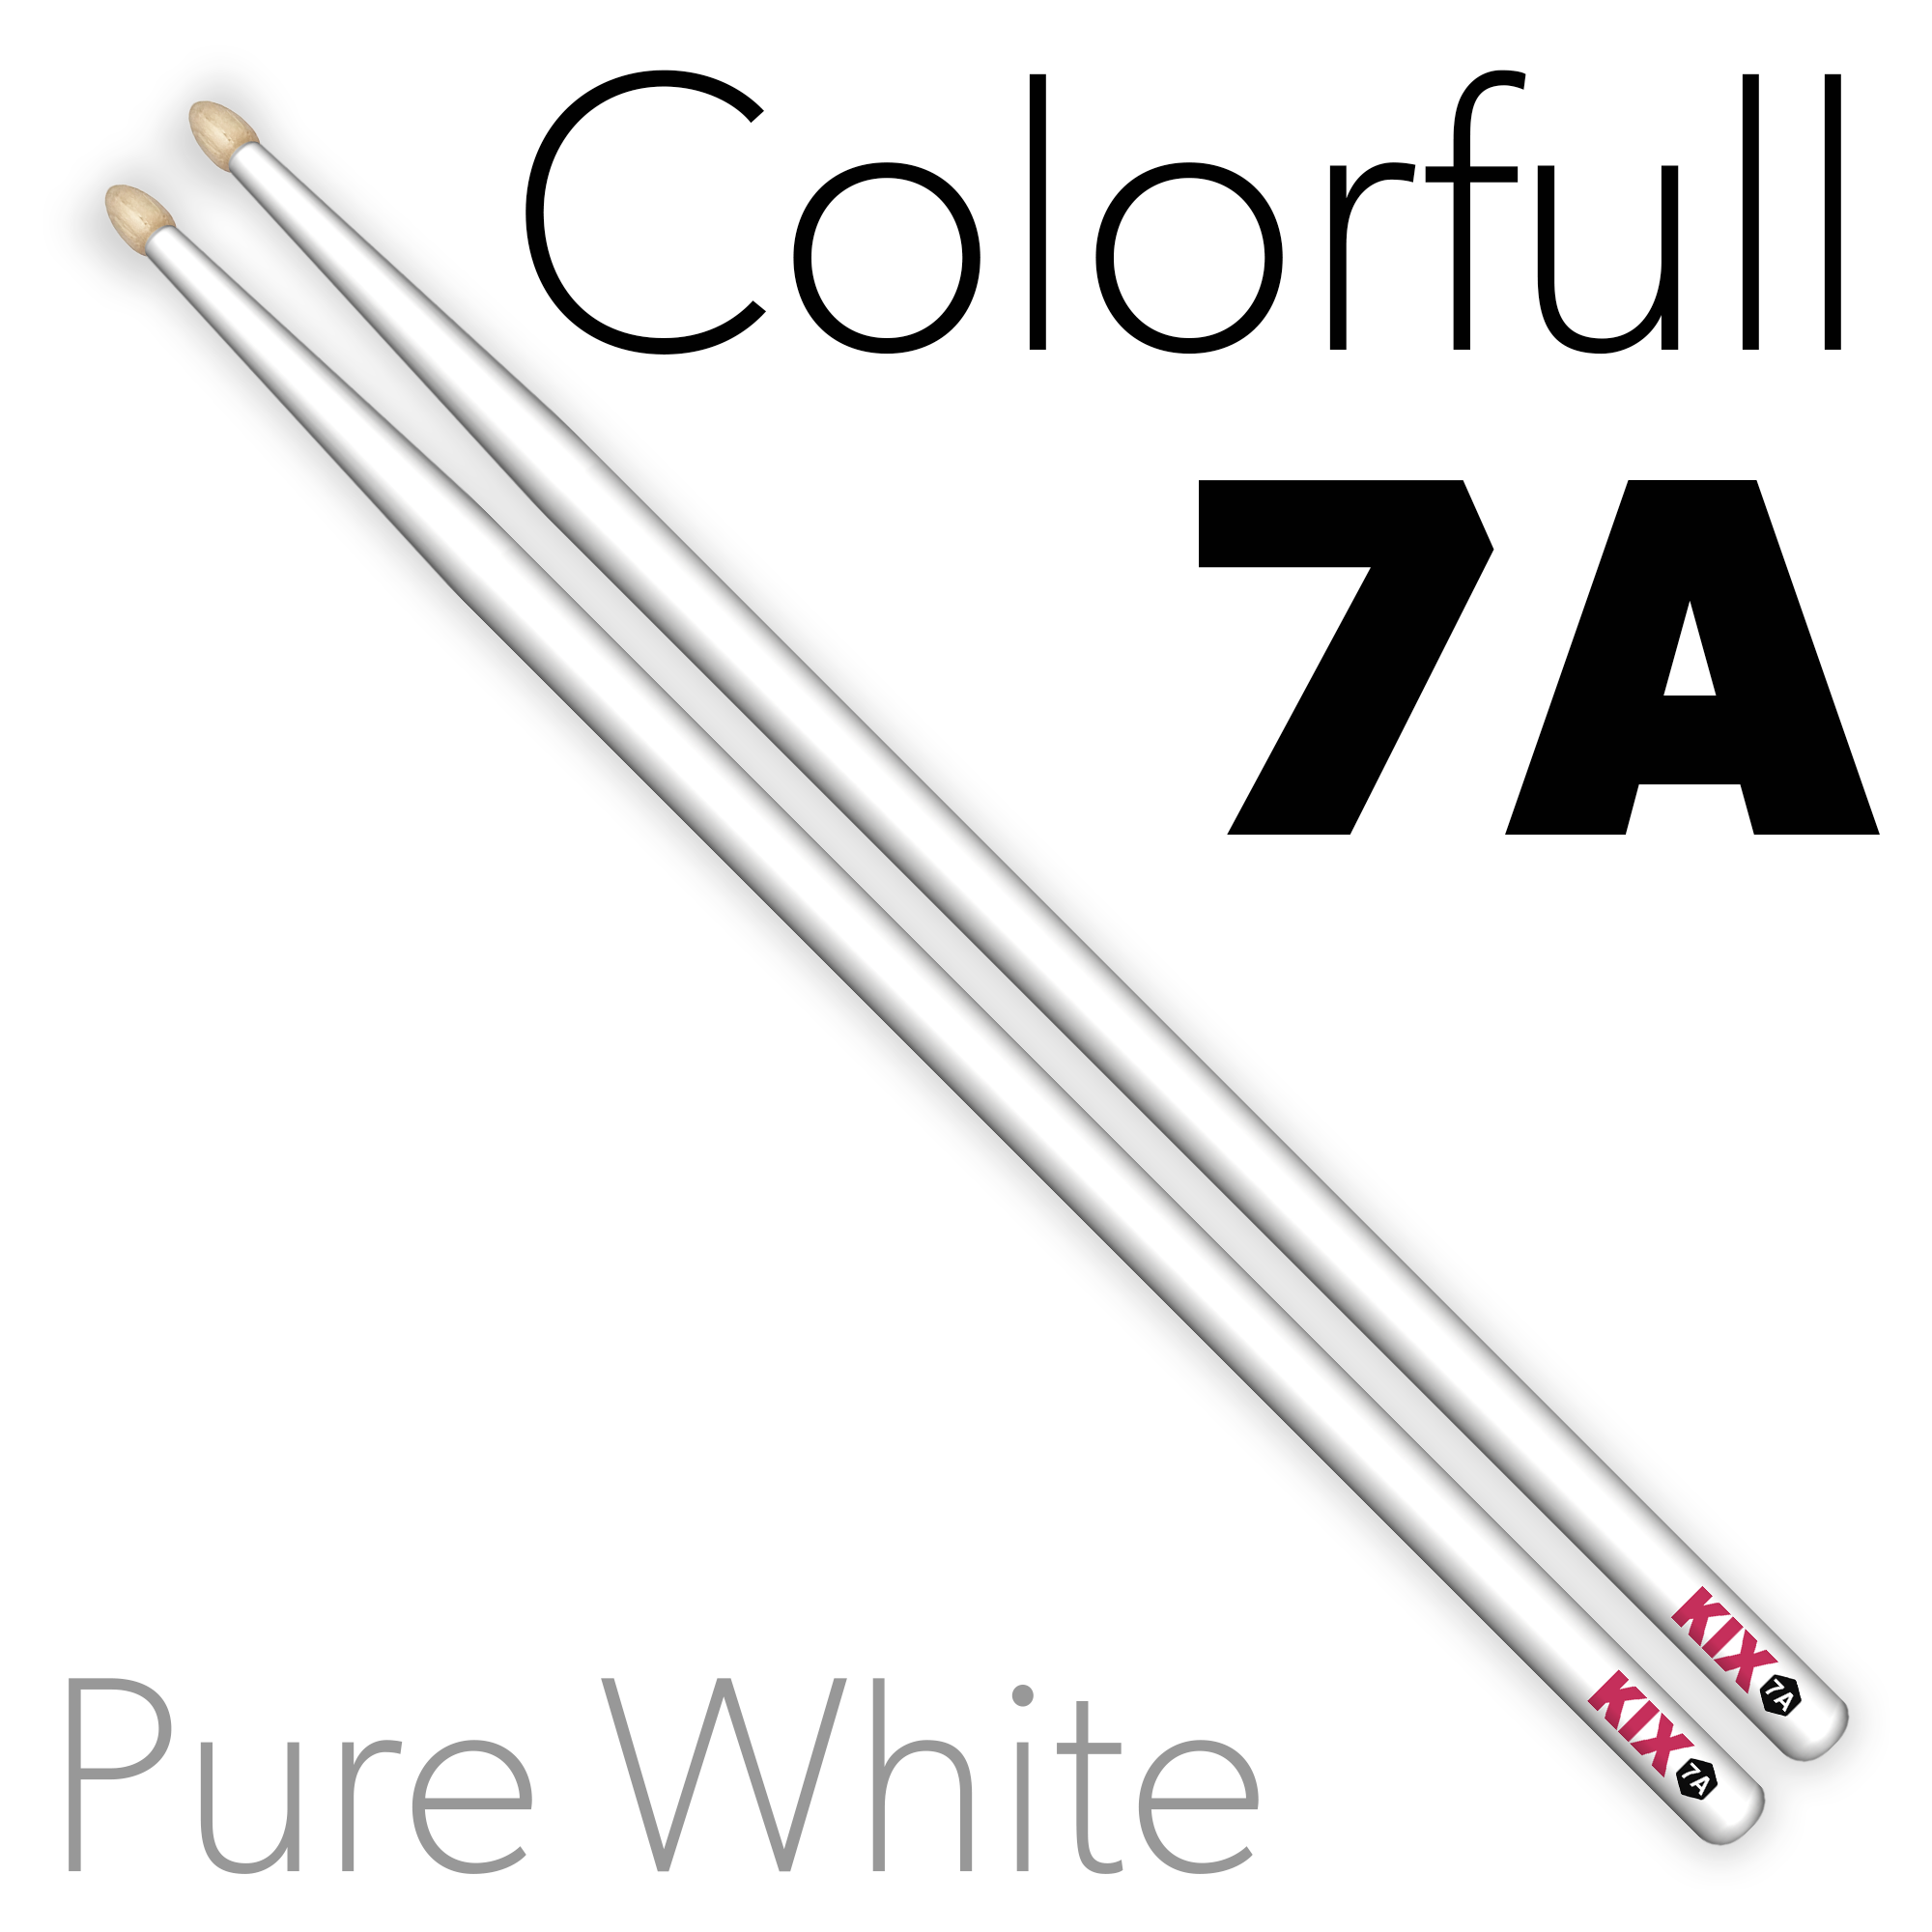 Baguettes Colorfull 7A – Pure White KIX